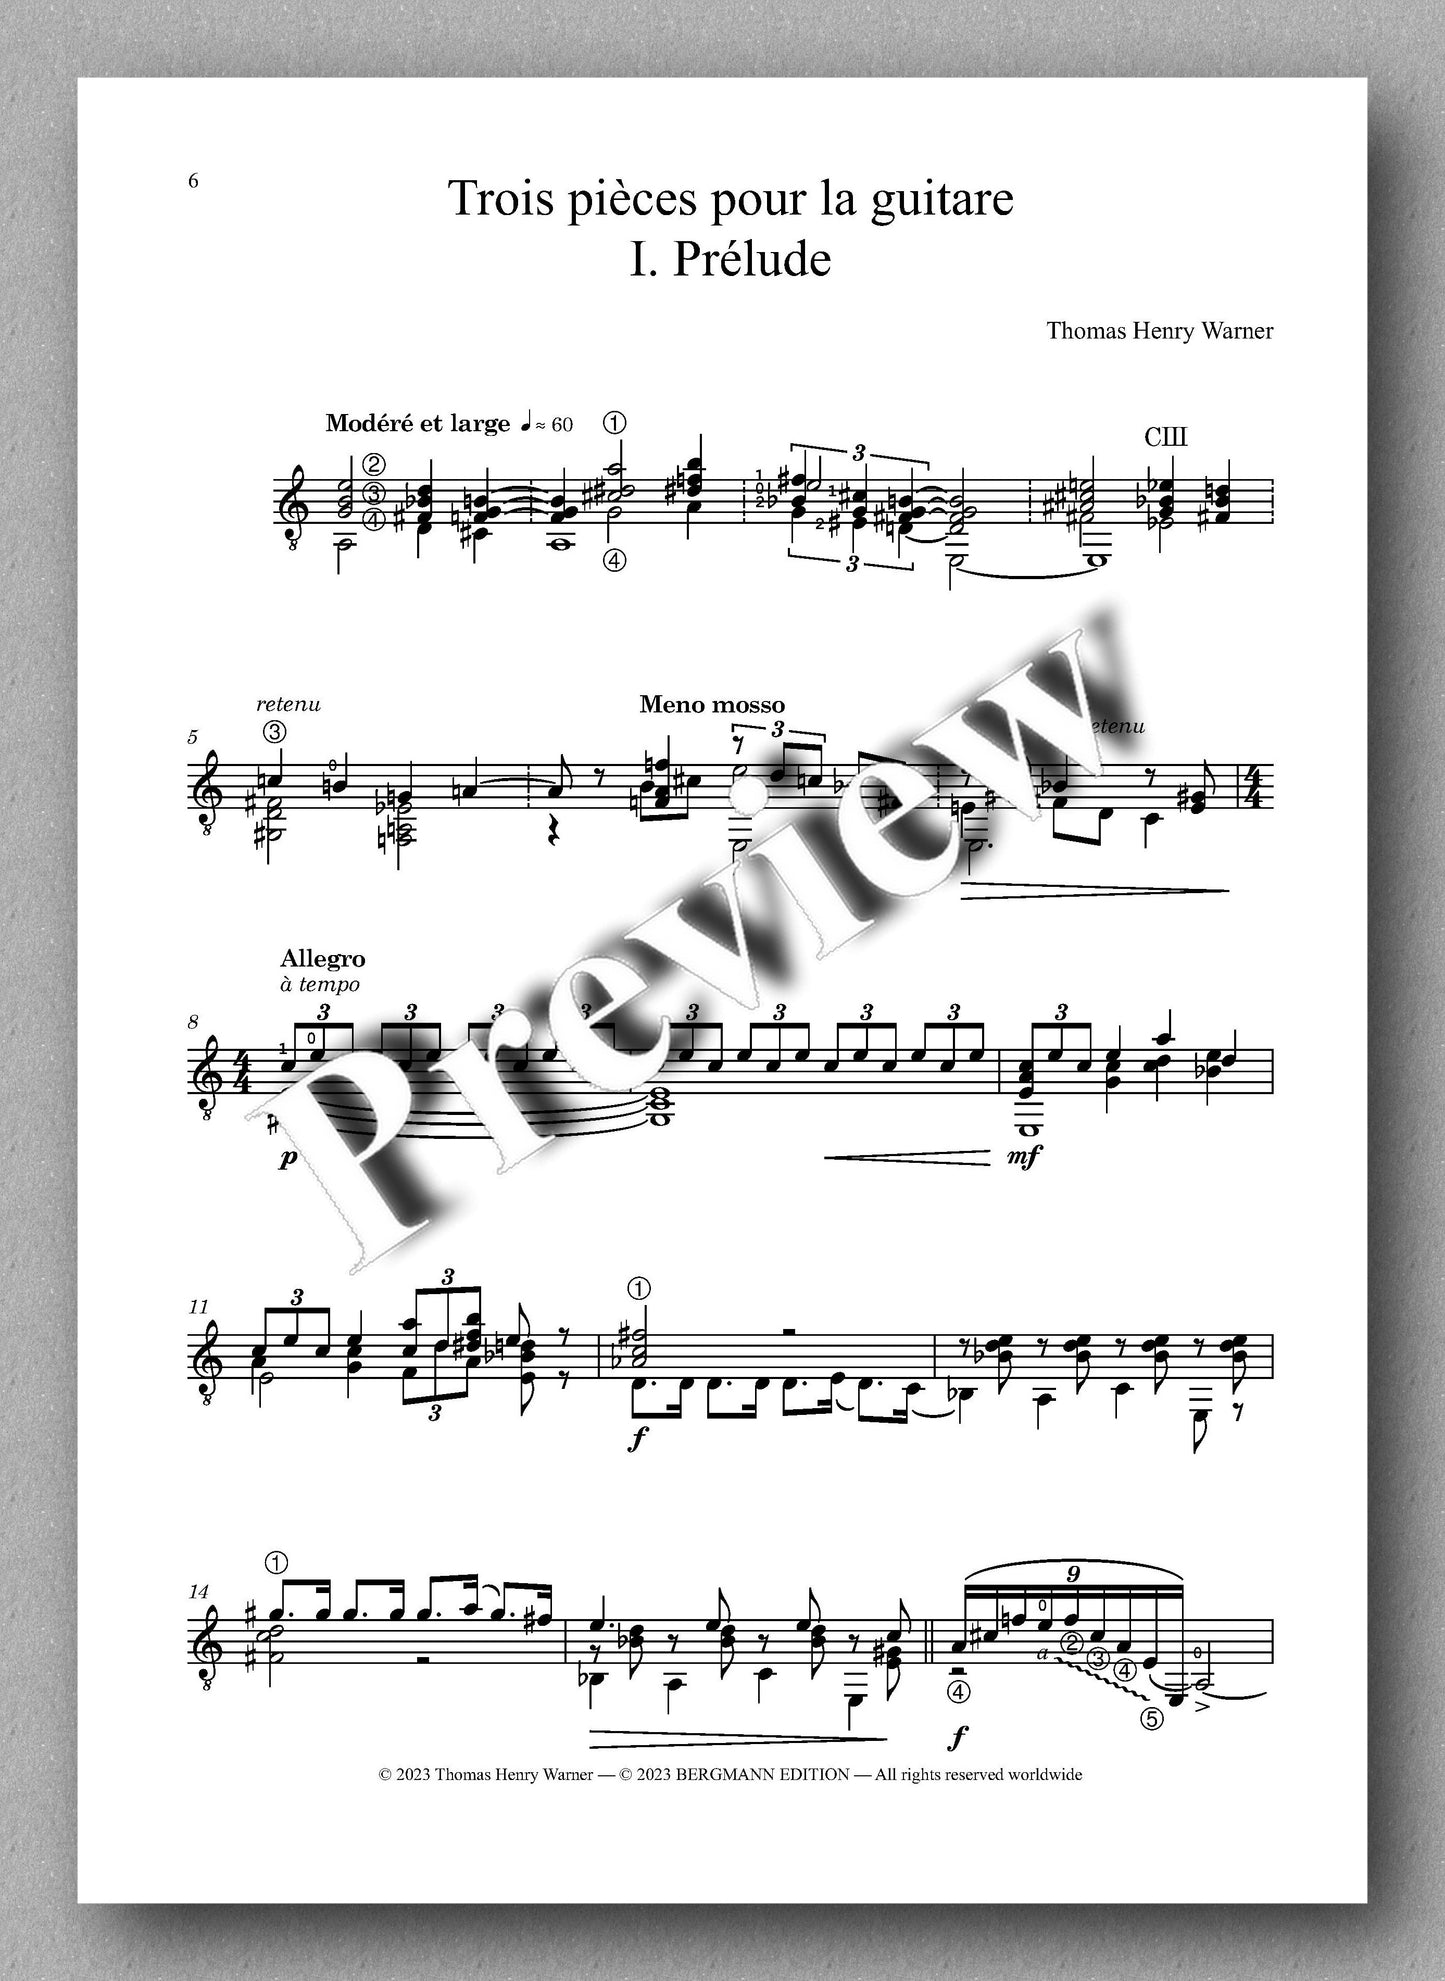 Trois pièces pour la guitare, by  Thomas Henry Warner - preview of the music score 1